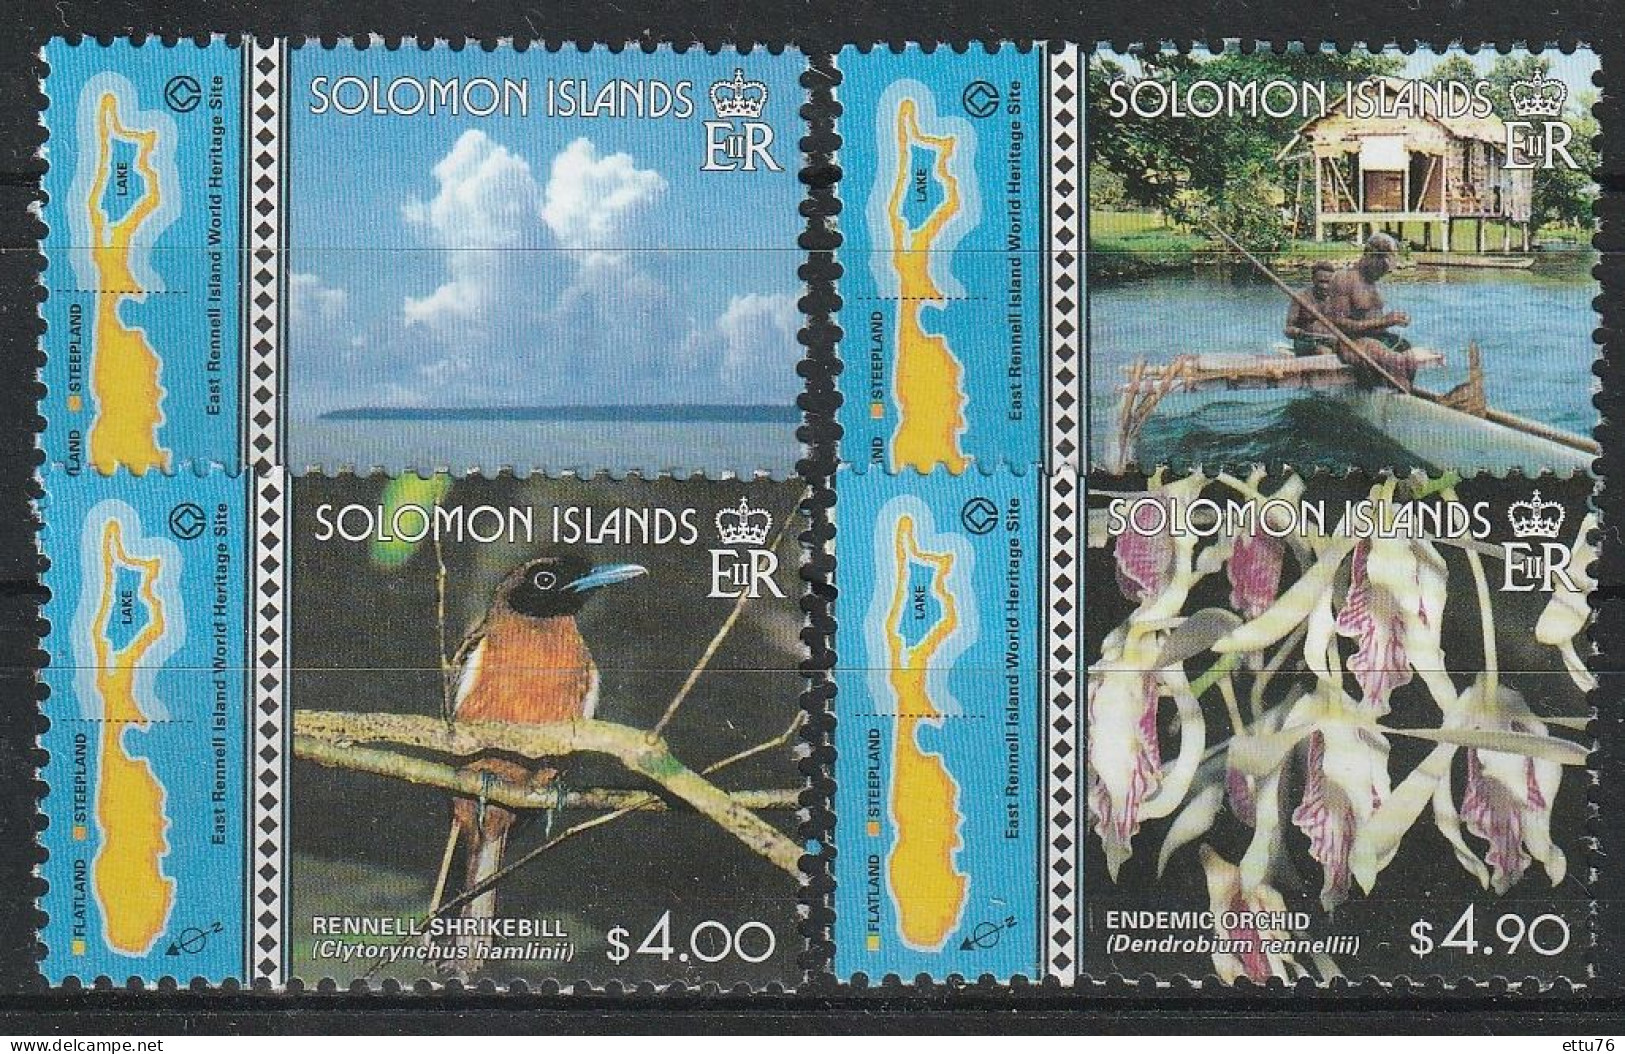 Solomon Islands 2000  East Rennel,World Heritage Site,Birds,Orchids  Set  MNH - Solomon Islands (1978-...)